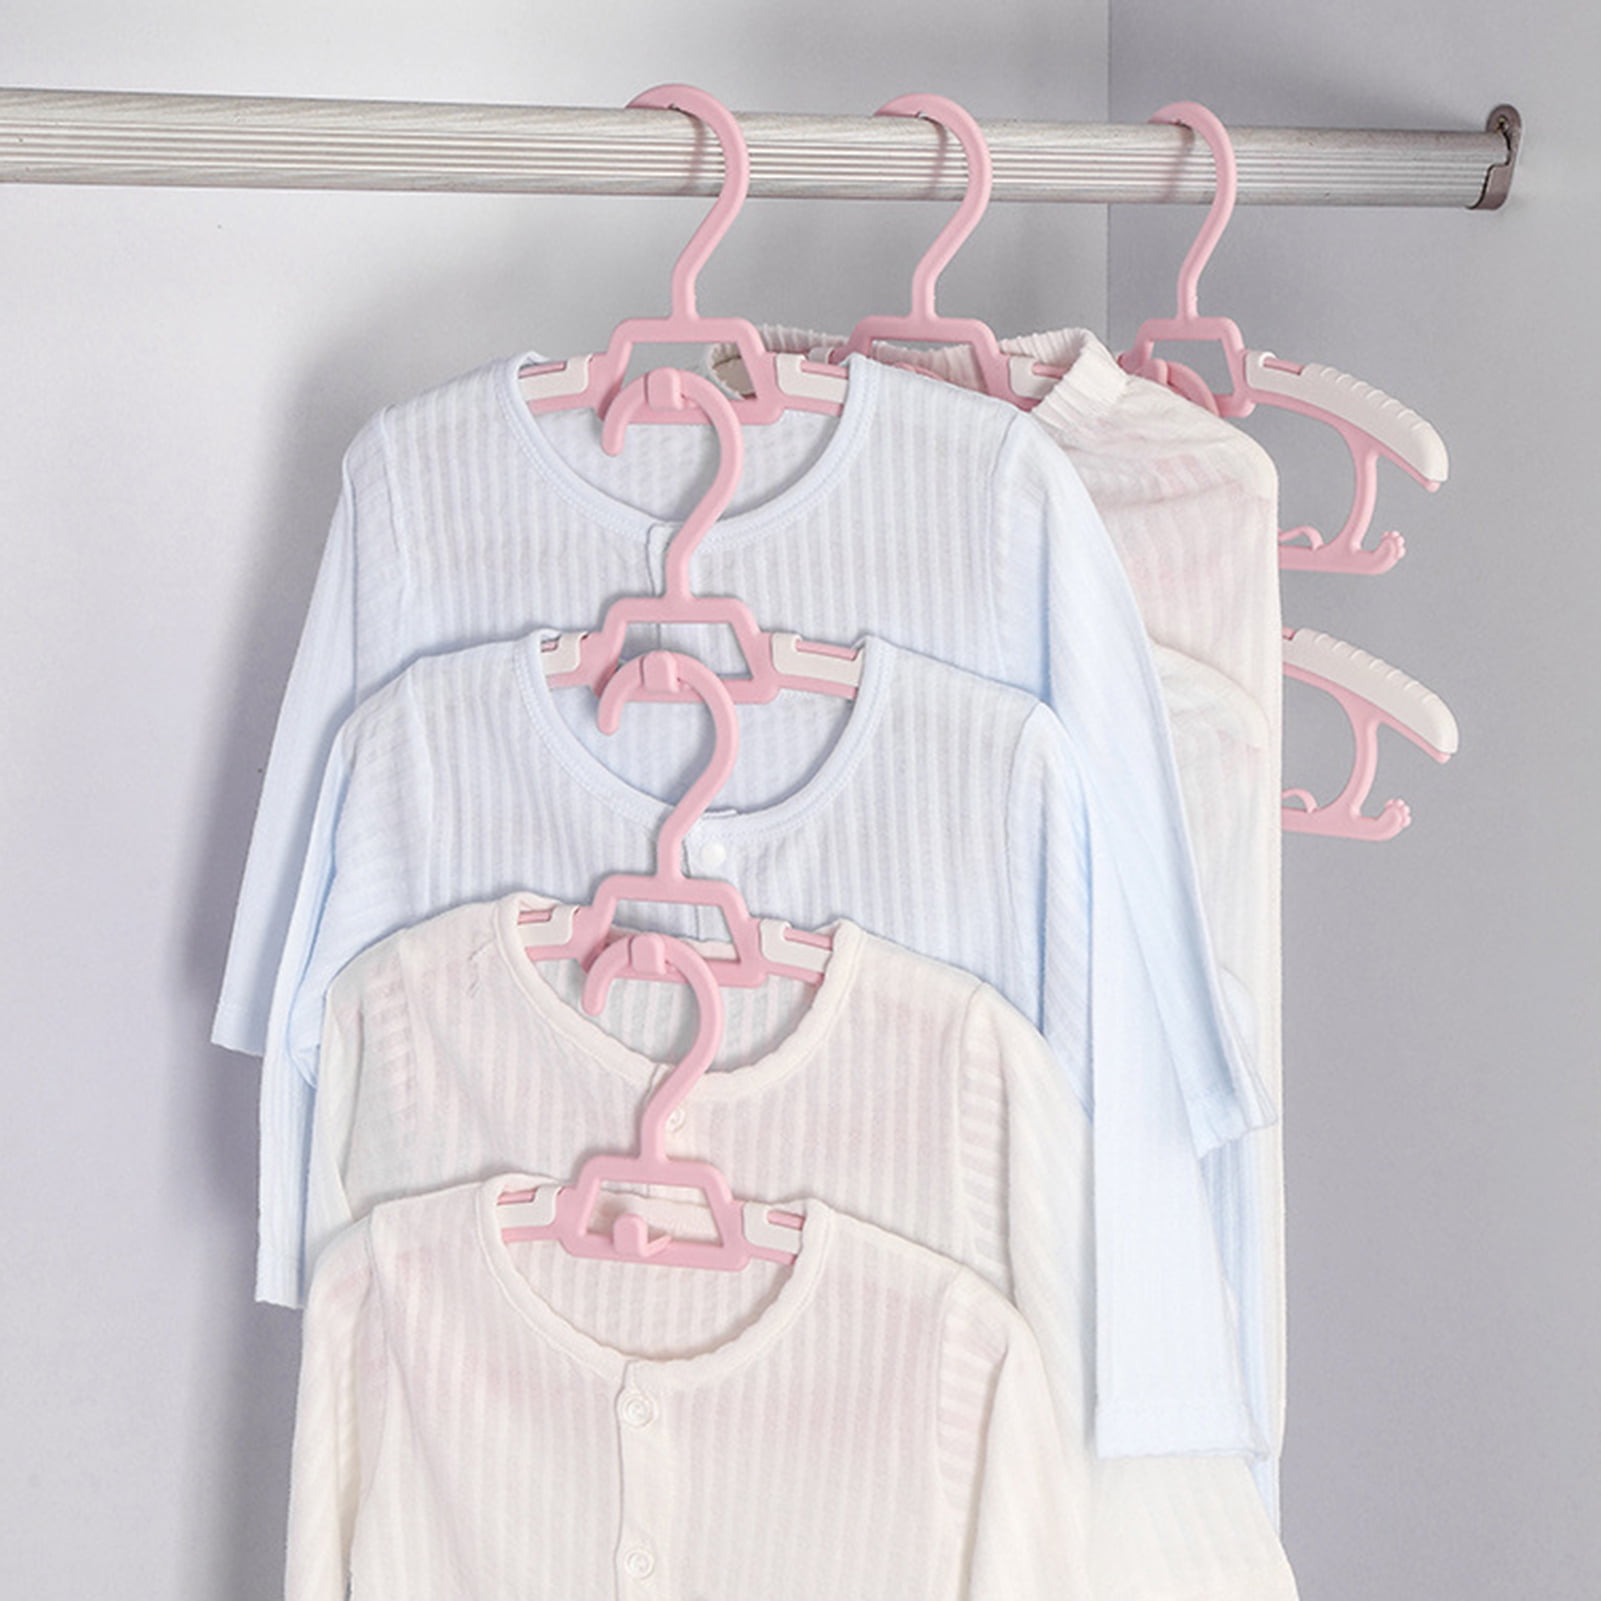 Cheer.US 5Pcs Premium Kids Velvet Hangers, Children's Clothes